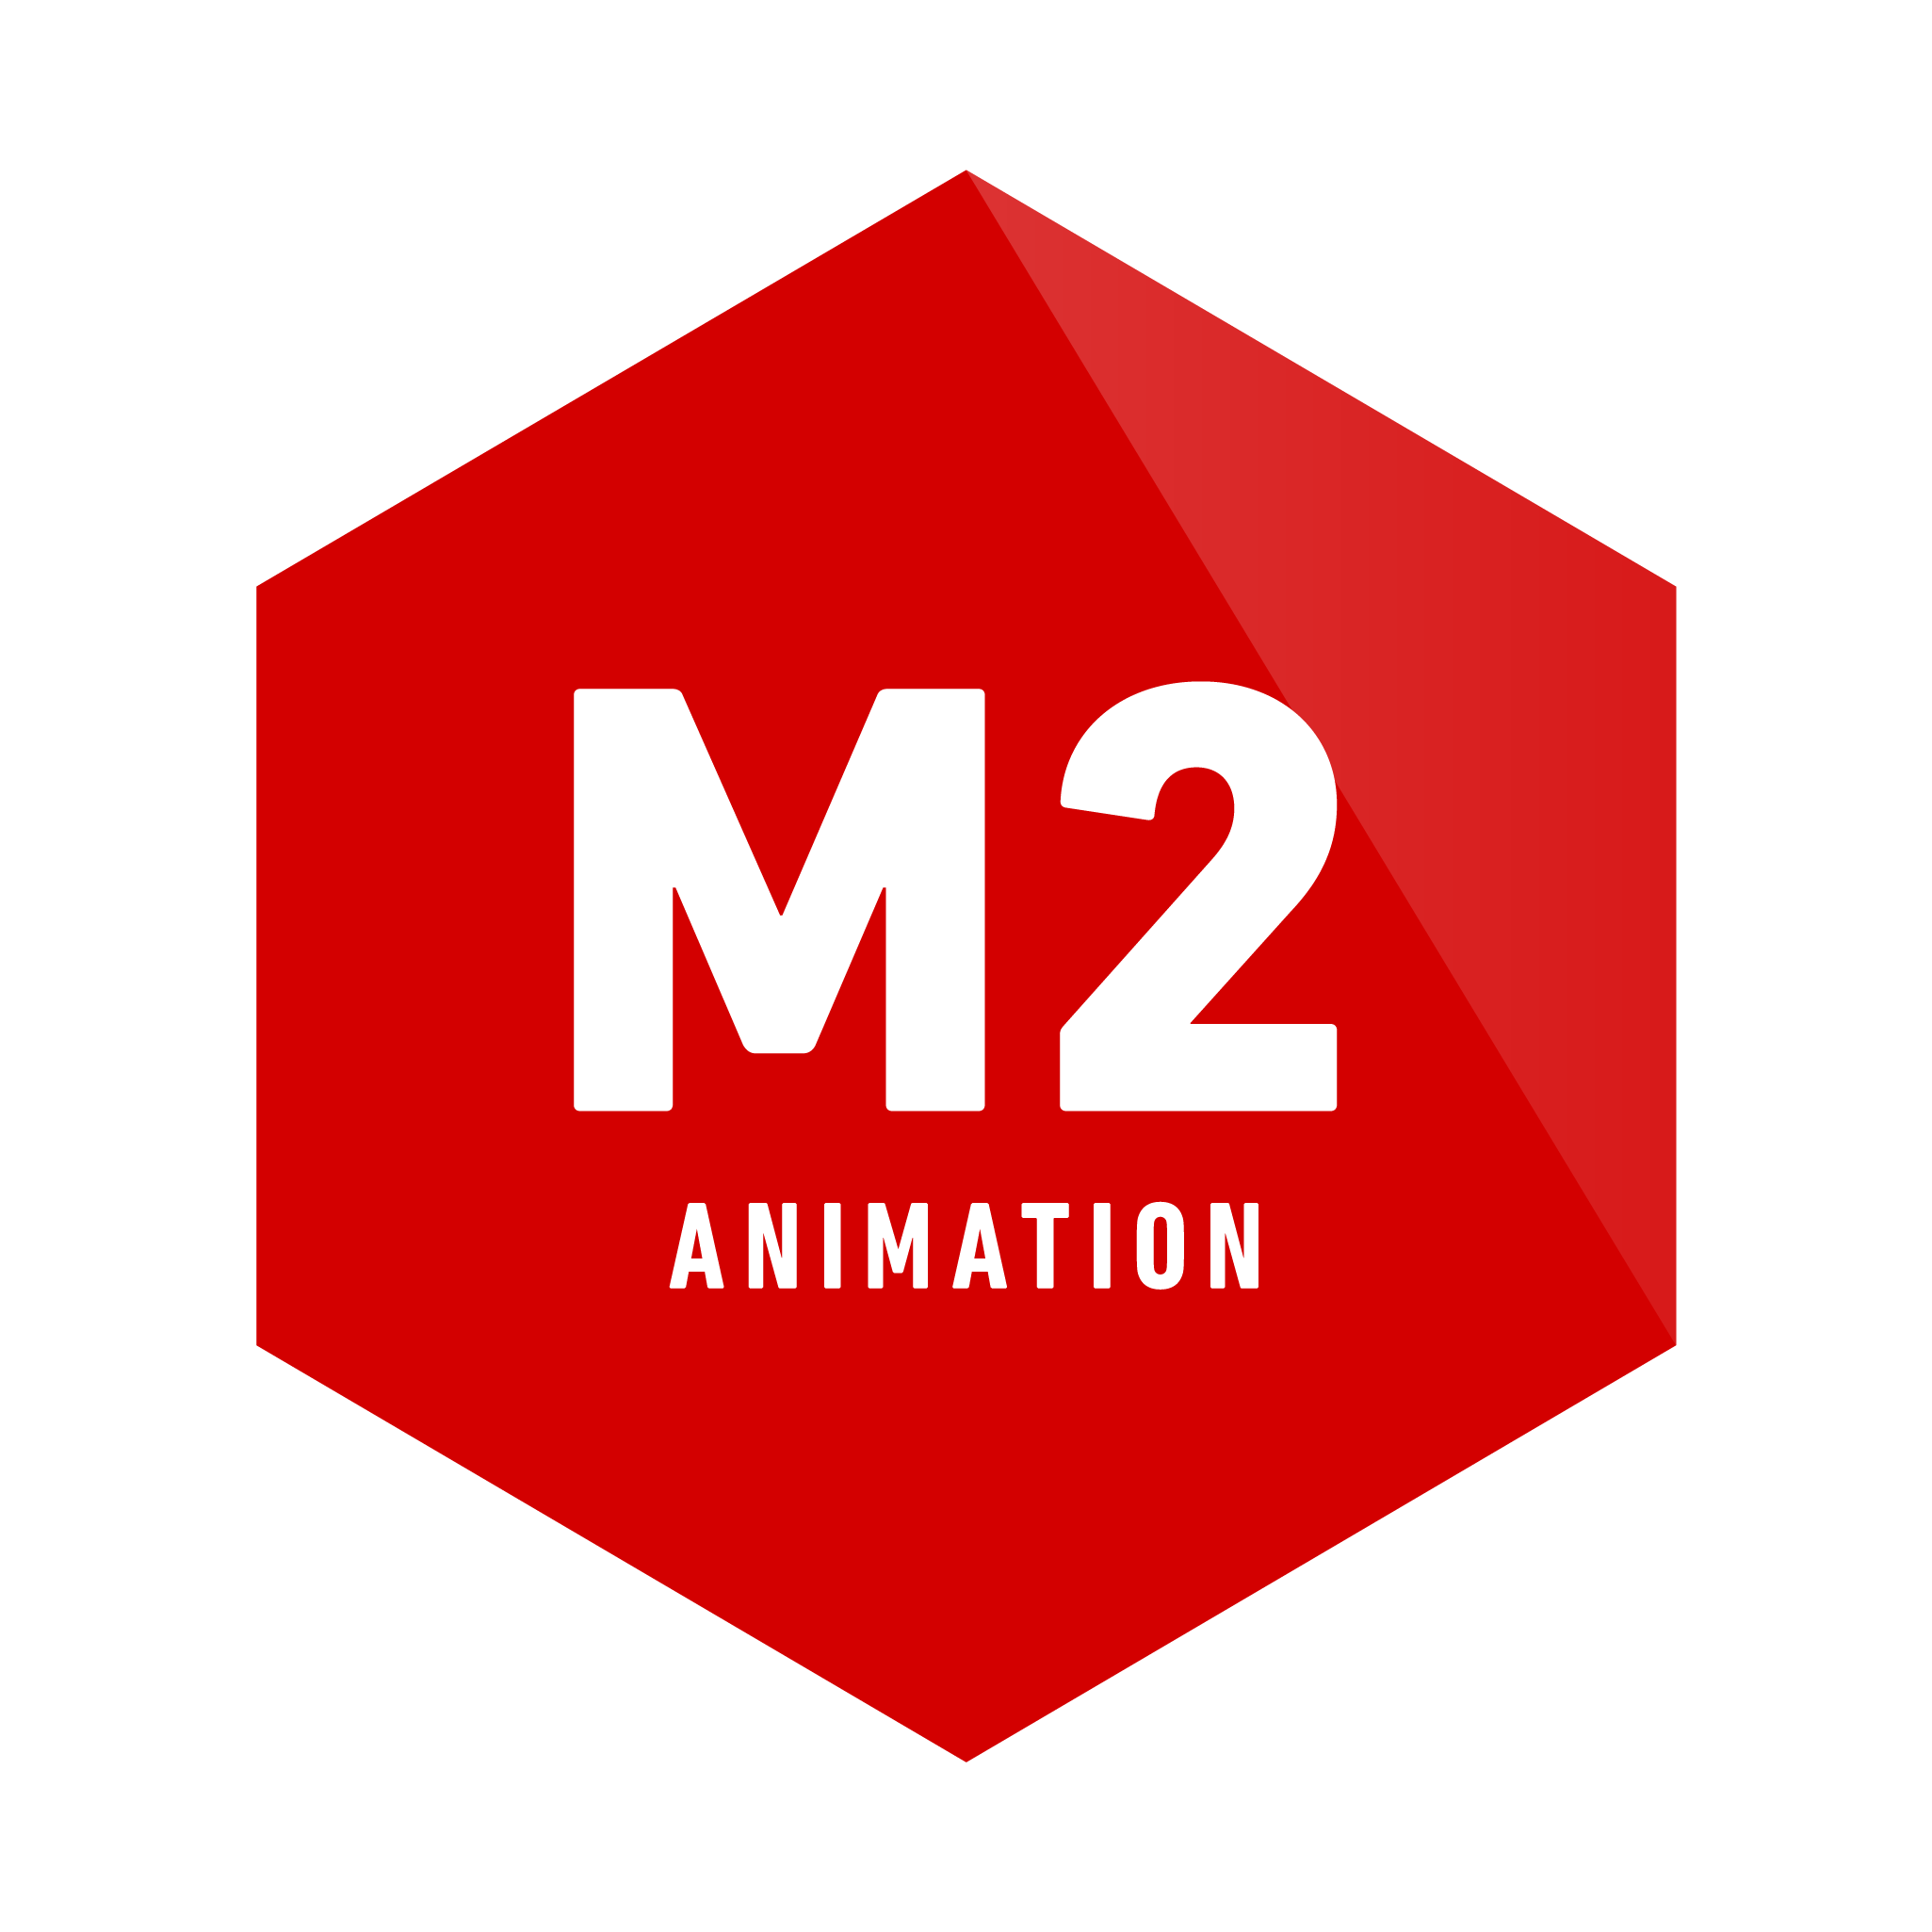 ANIMATION - M2 Film